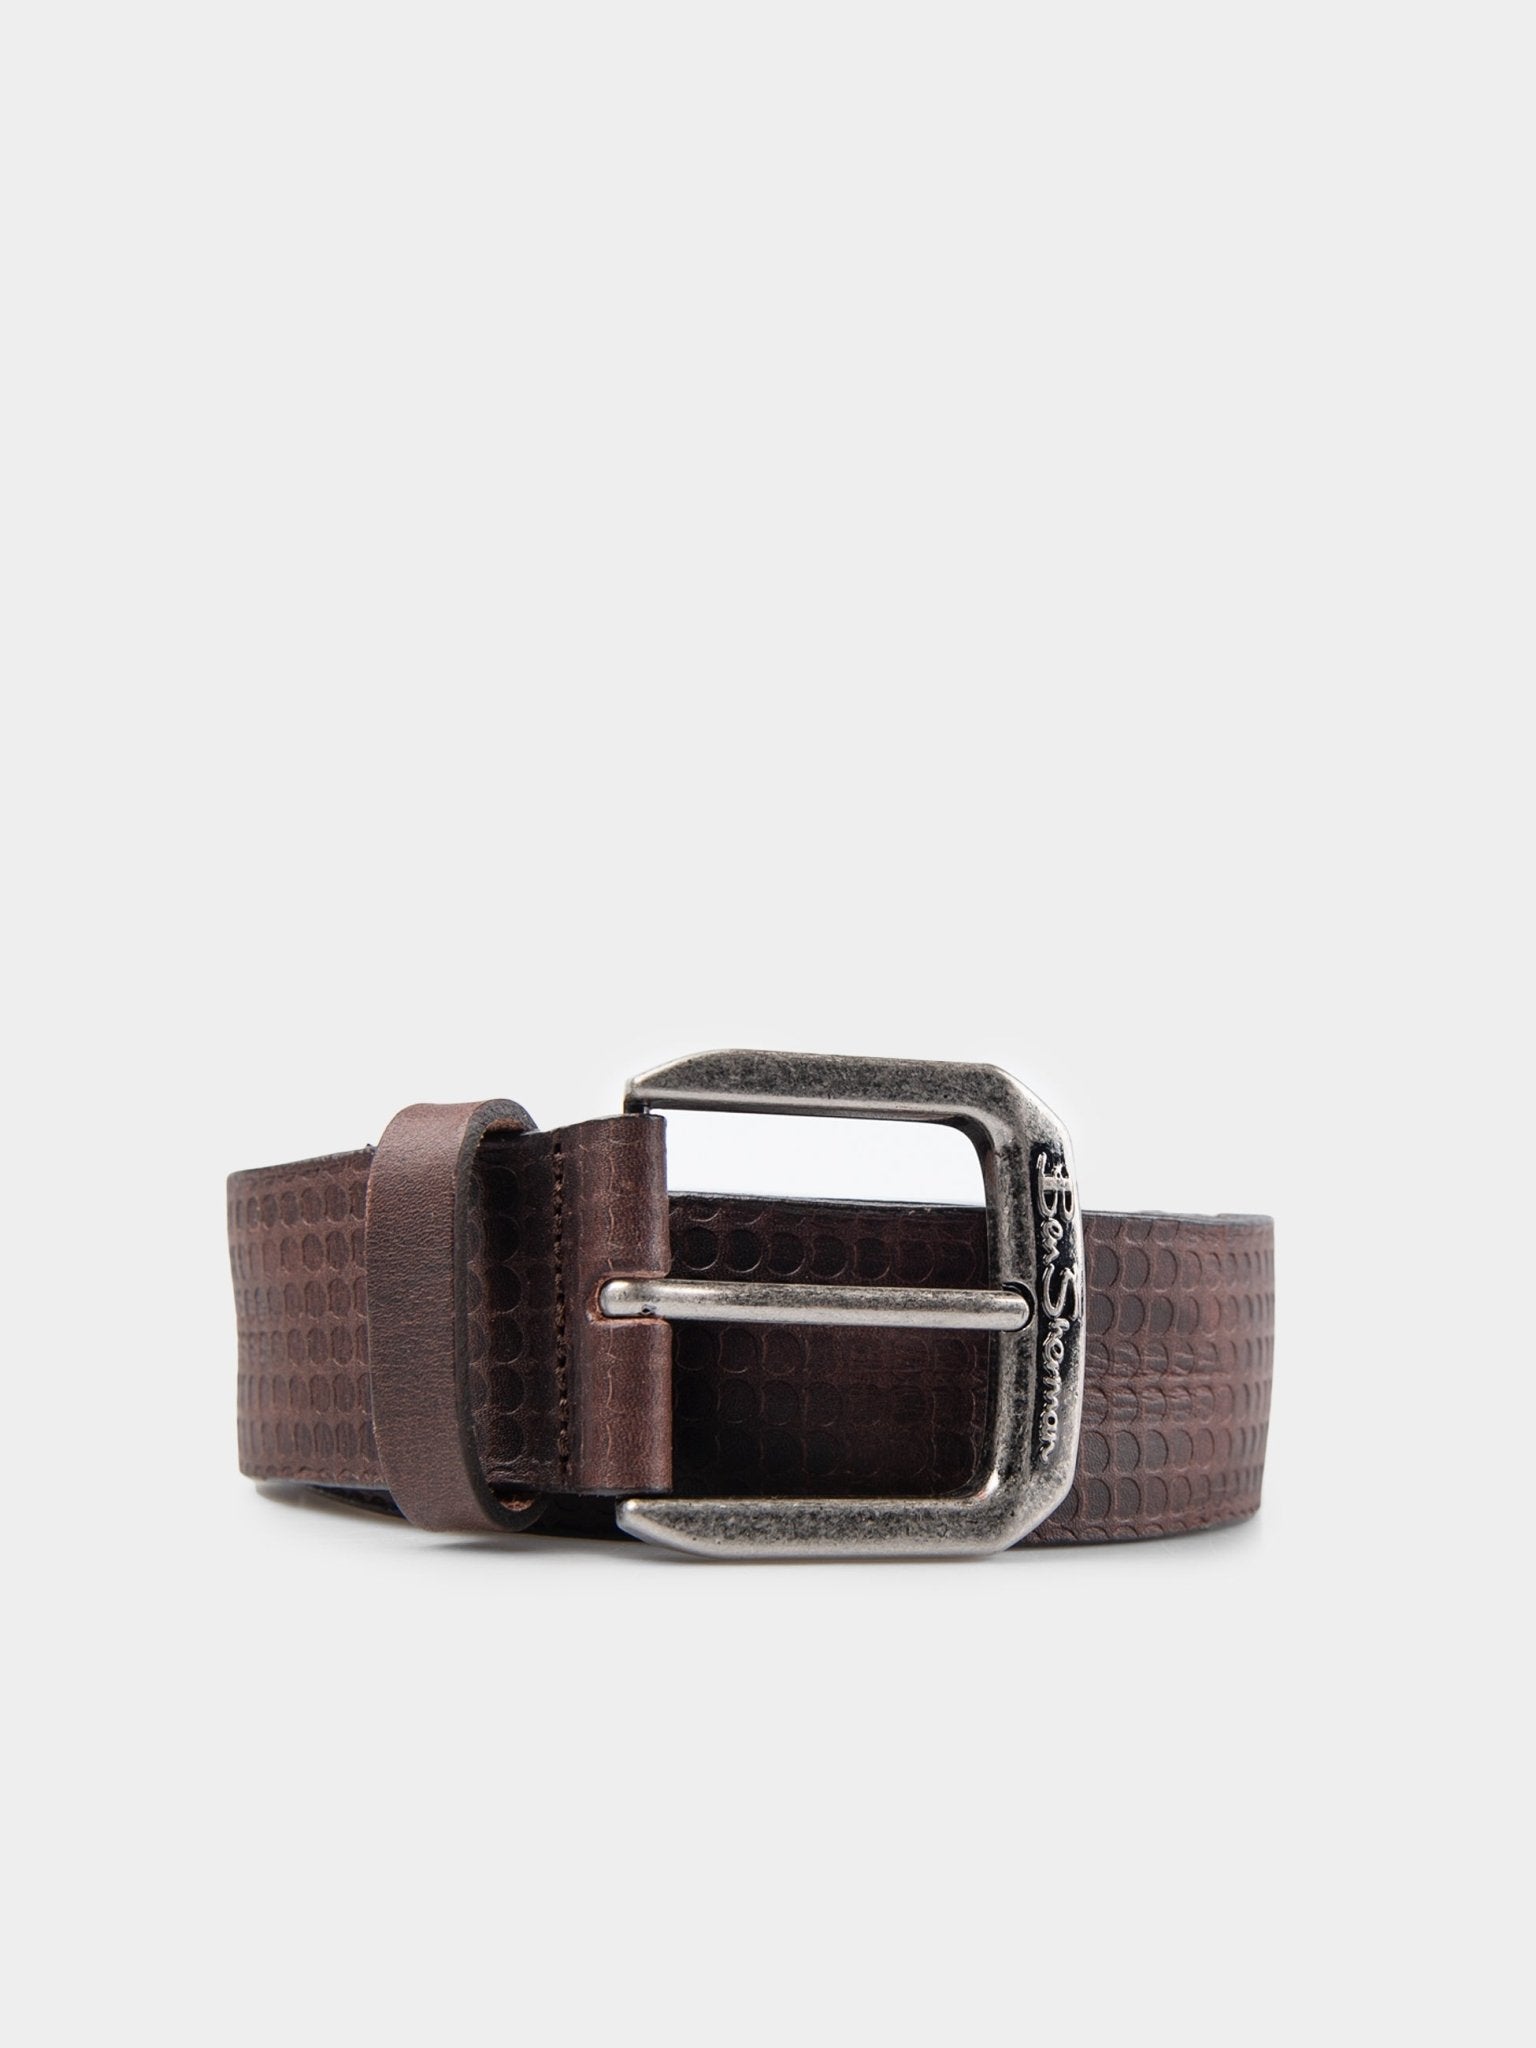 Ben Textured Leather Belt - Brown